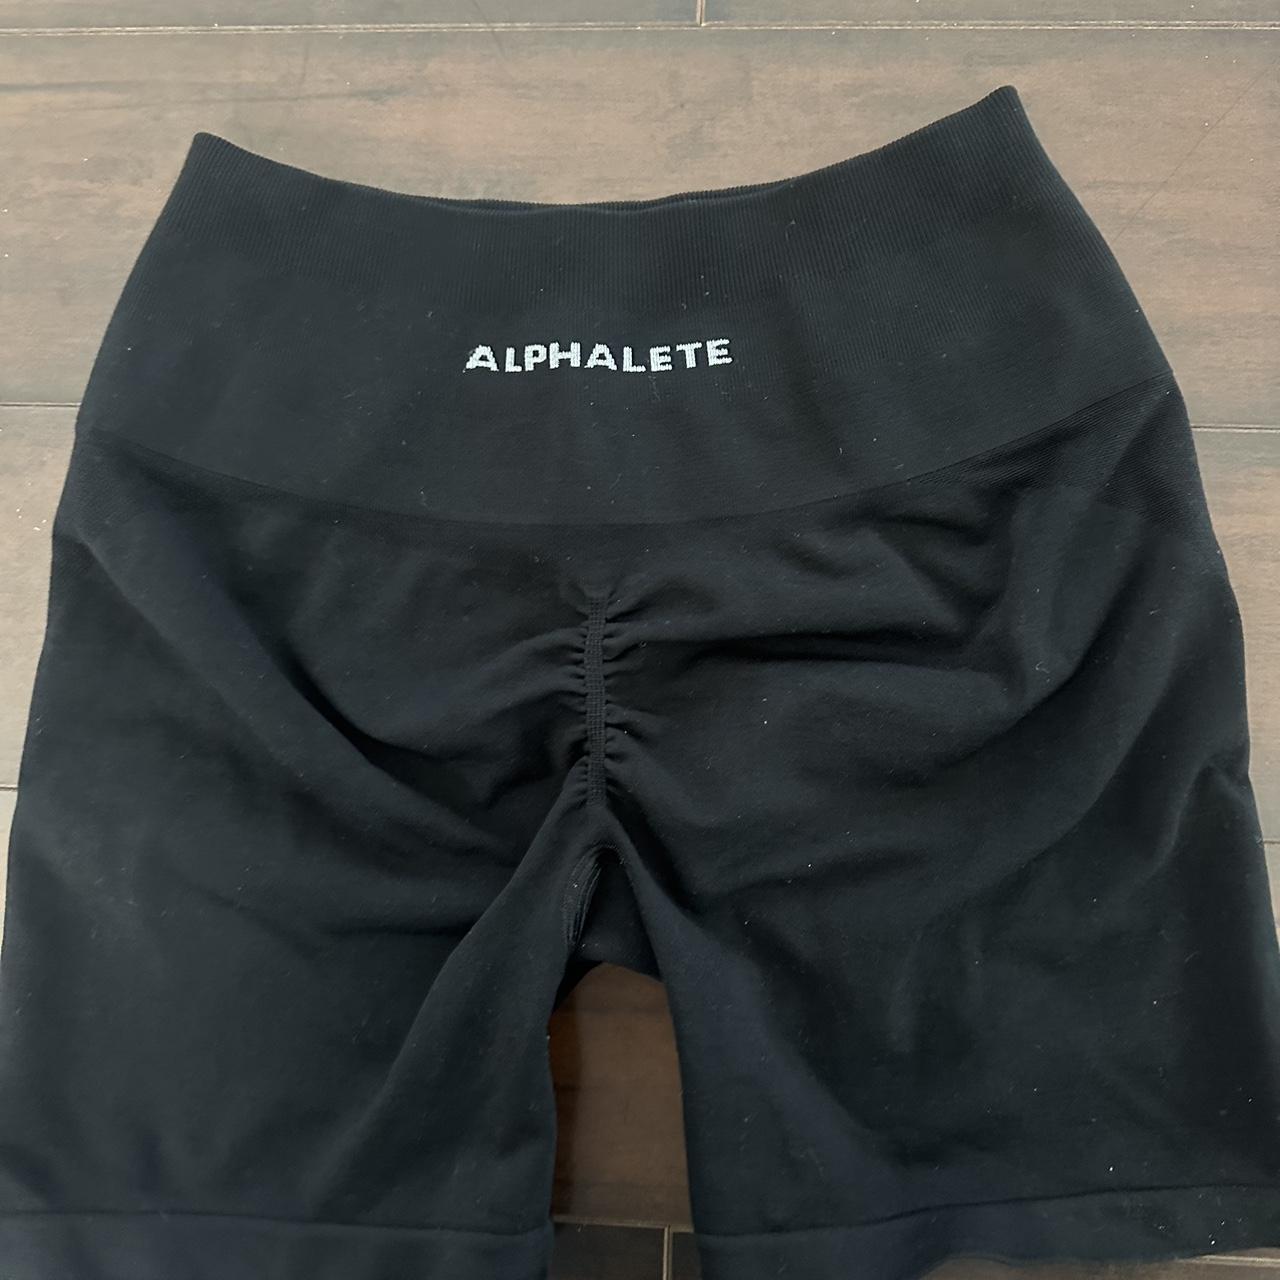 New Alphalete #amplify shorts review